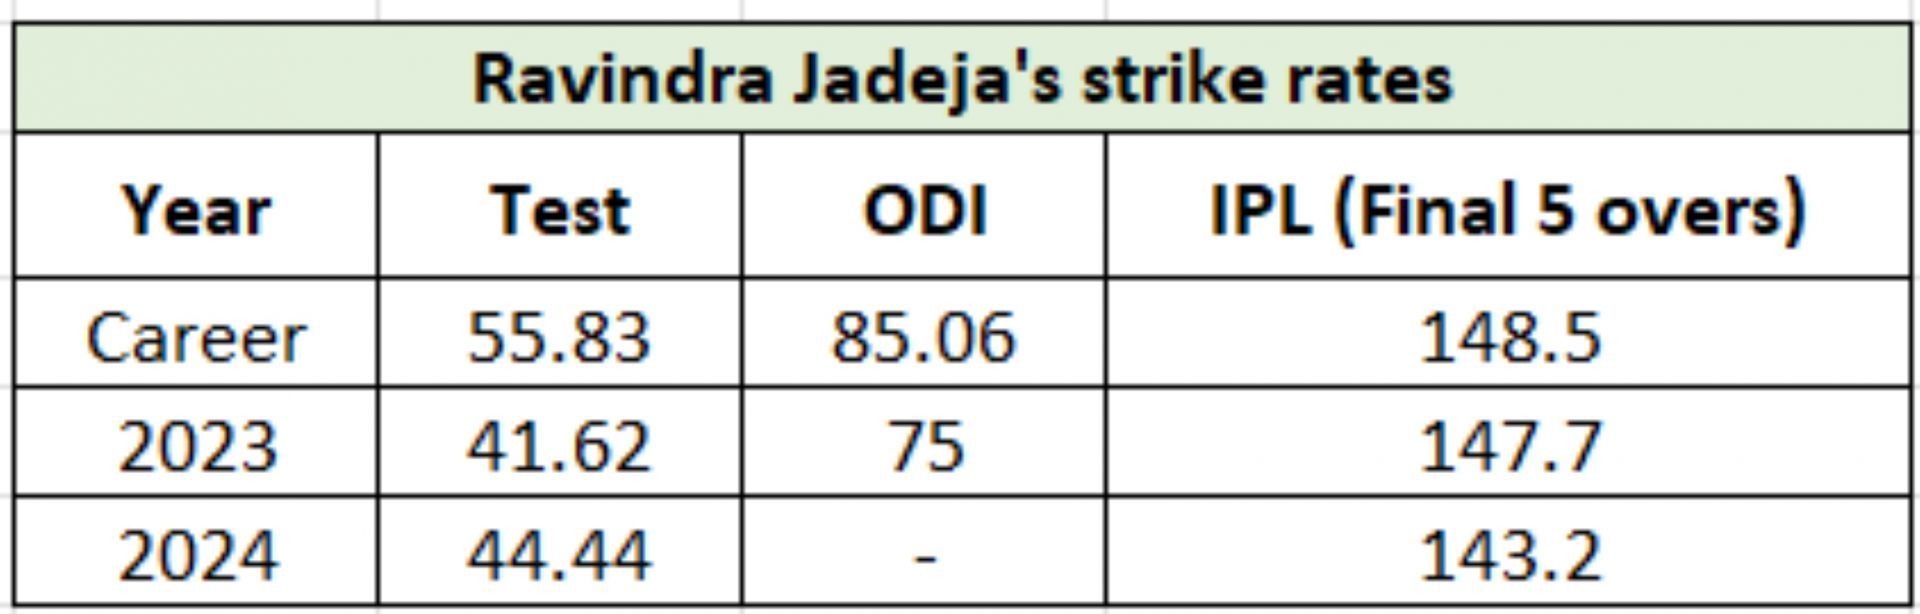 Has International cricket taken a toll on Jadeja&#039;s tempo in the IPL? (Credit: Cricinfo Cricmetric)